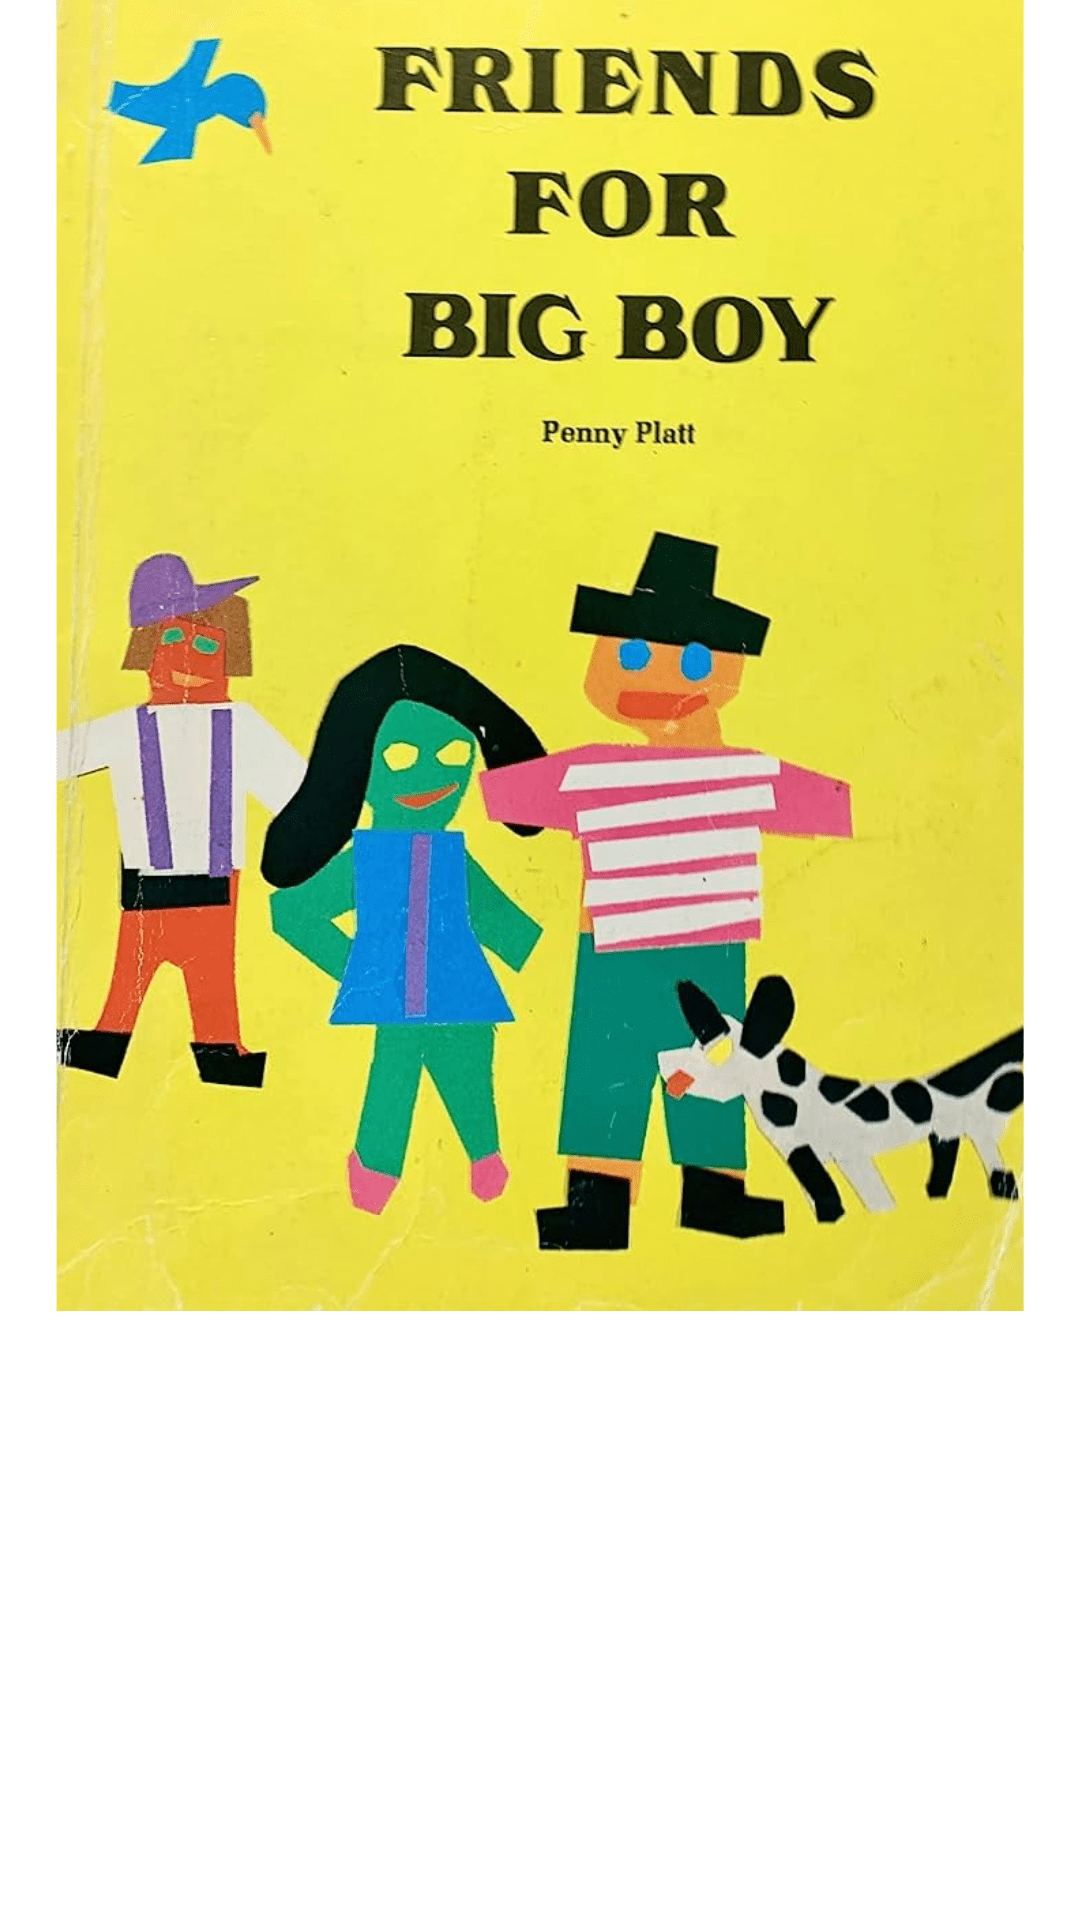 Friends for Big Boy by Penny Platt